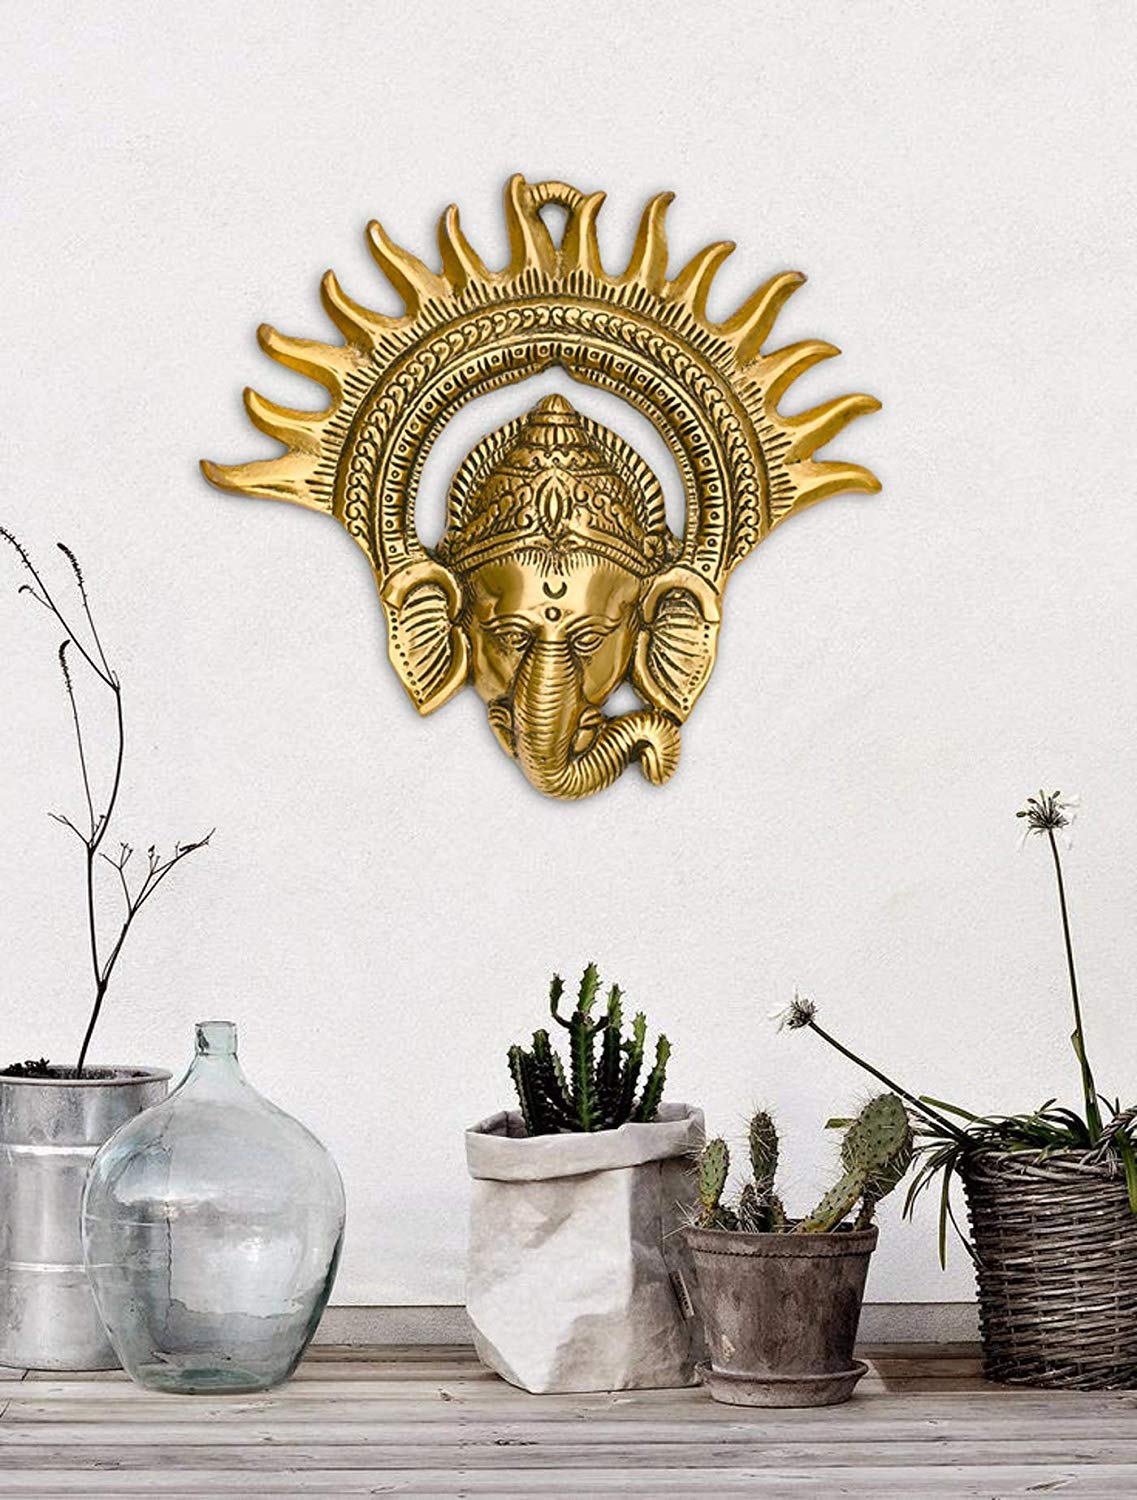 Ganesha wall hangings and Ganesha FIgurines